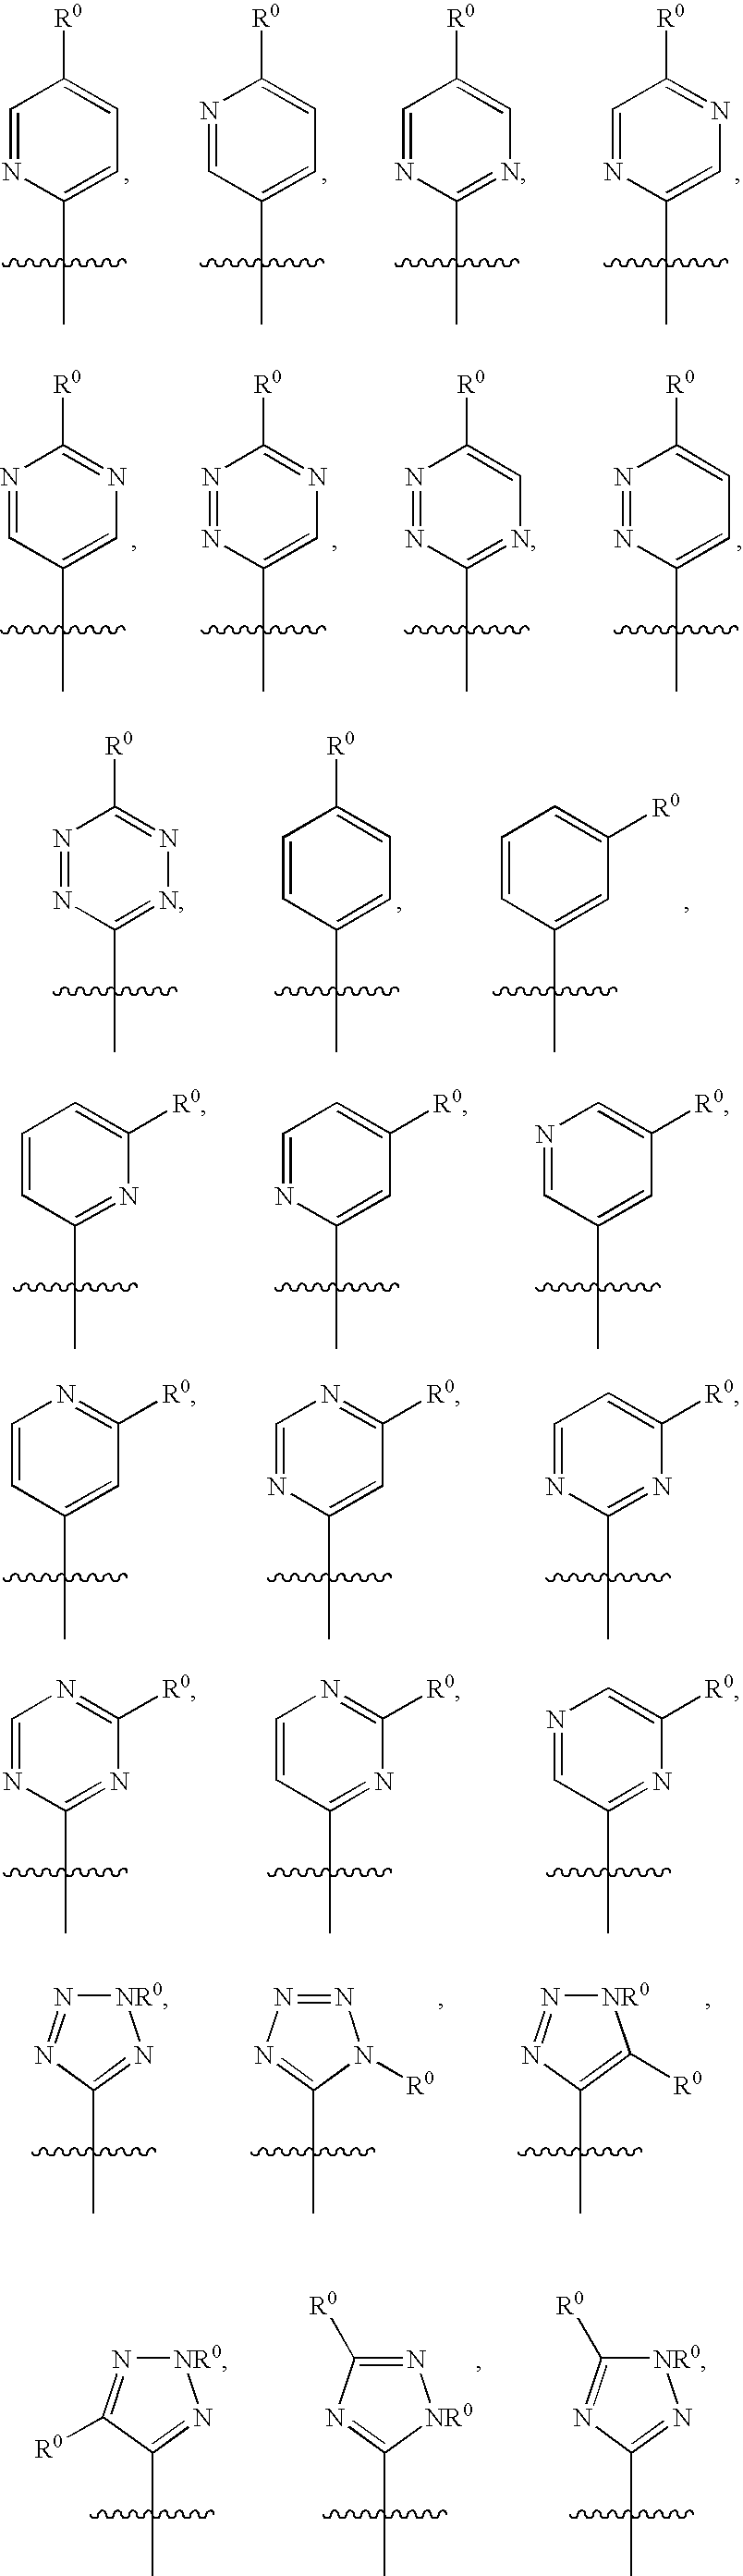 Dibenzyl Amine Compounds and Derivatives